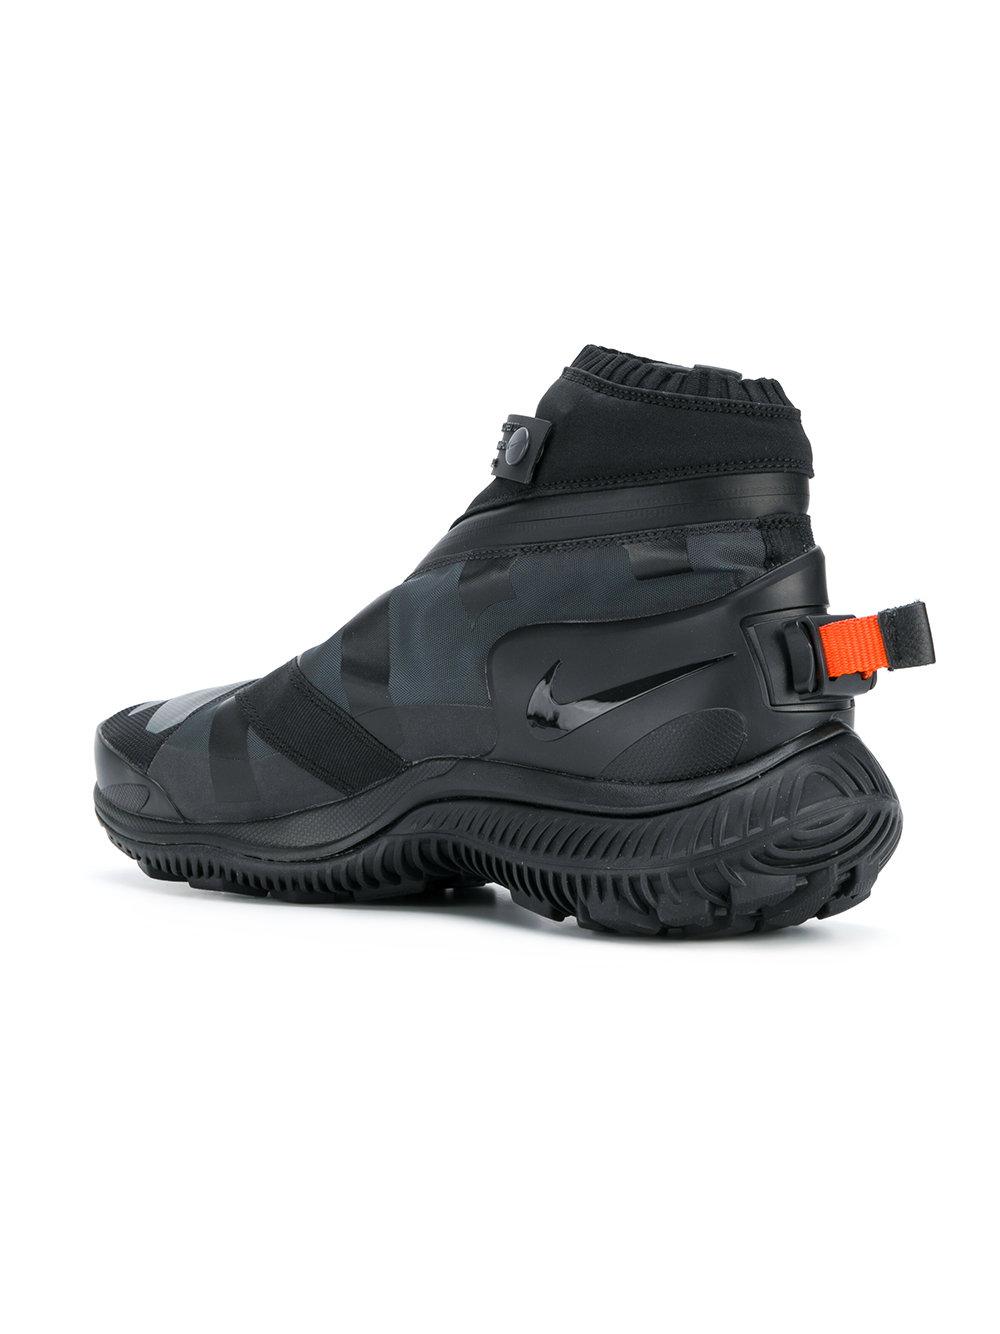 Nike Lab Gyakusou Nsw Gaiter Boot Sneakers in Black for Men - Lyst